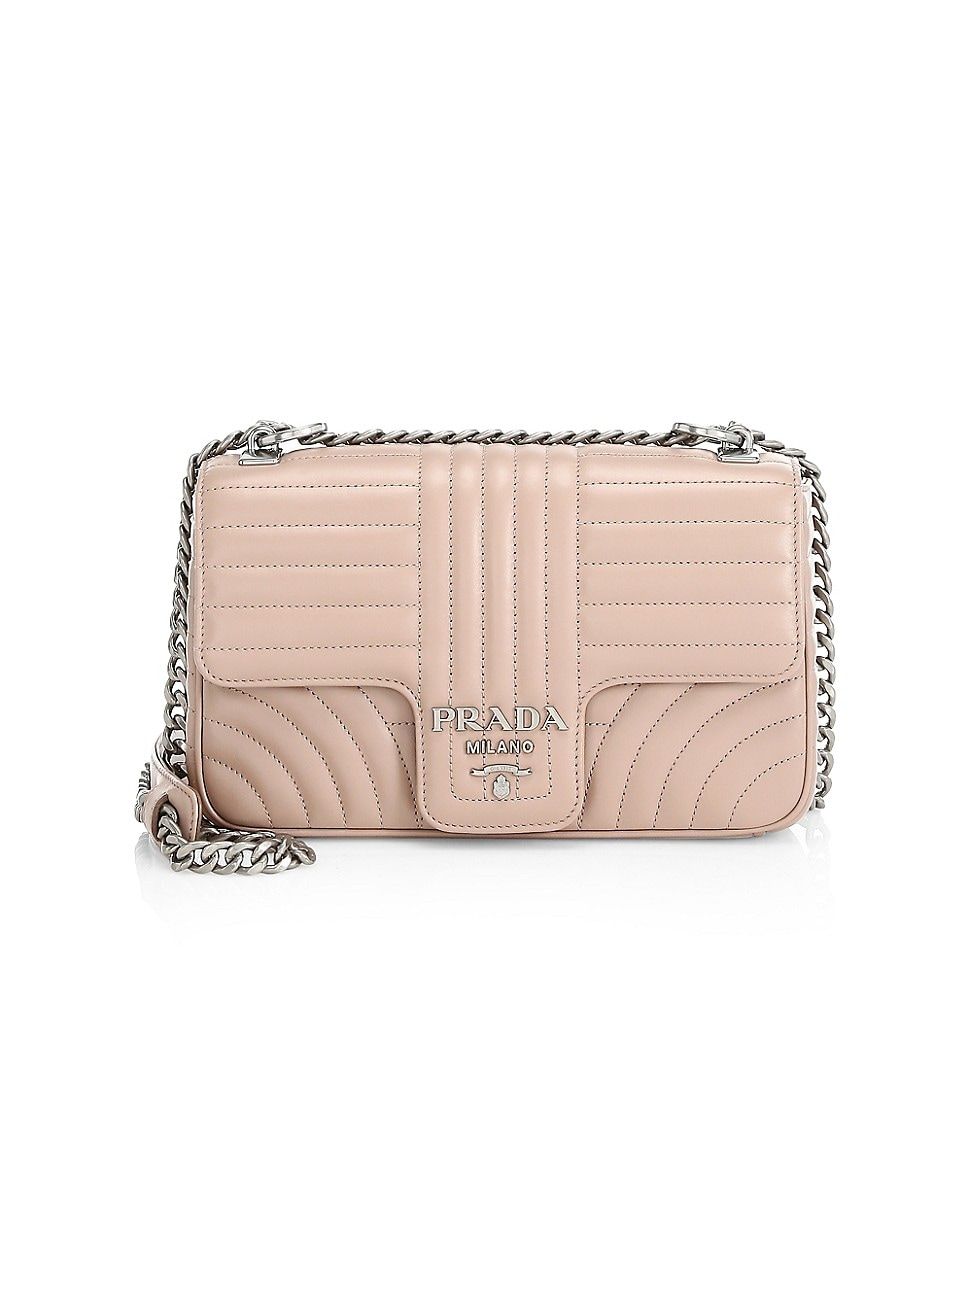 Prada Women's Medium Diagramme Leather Shoulder Bag - Cipria | Saks Fifth Avenue